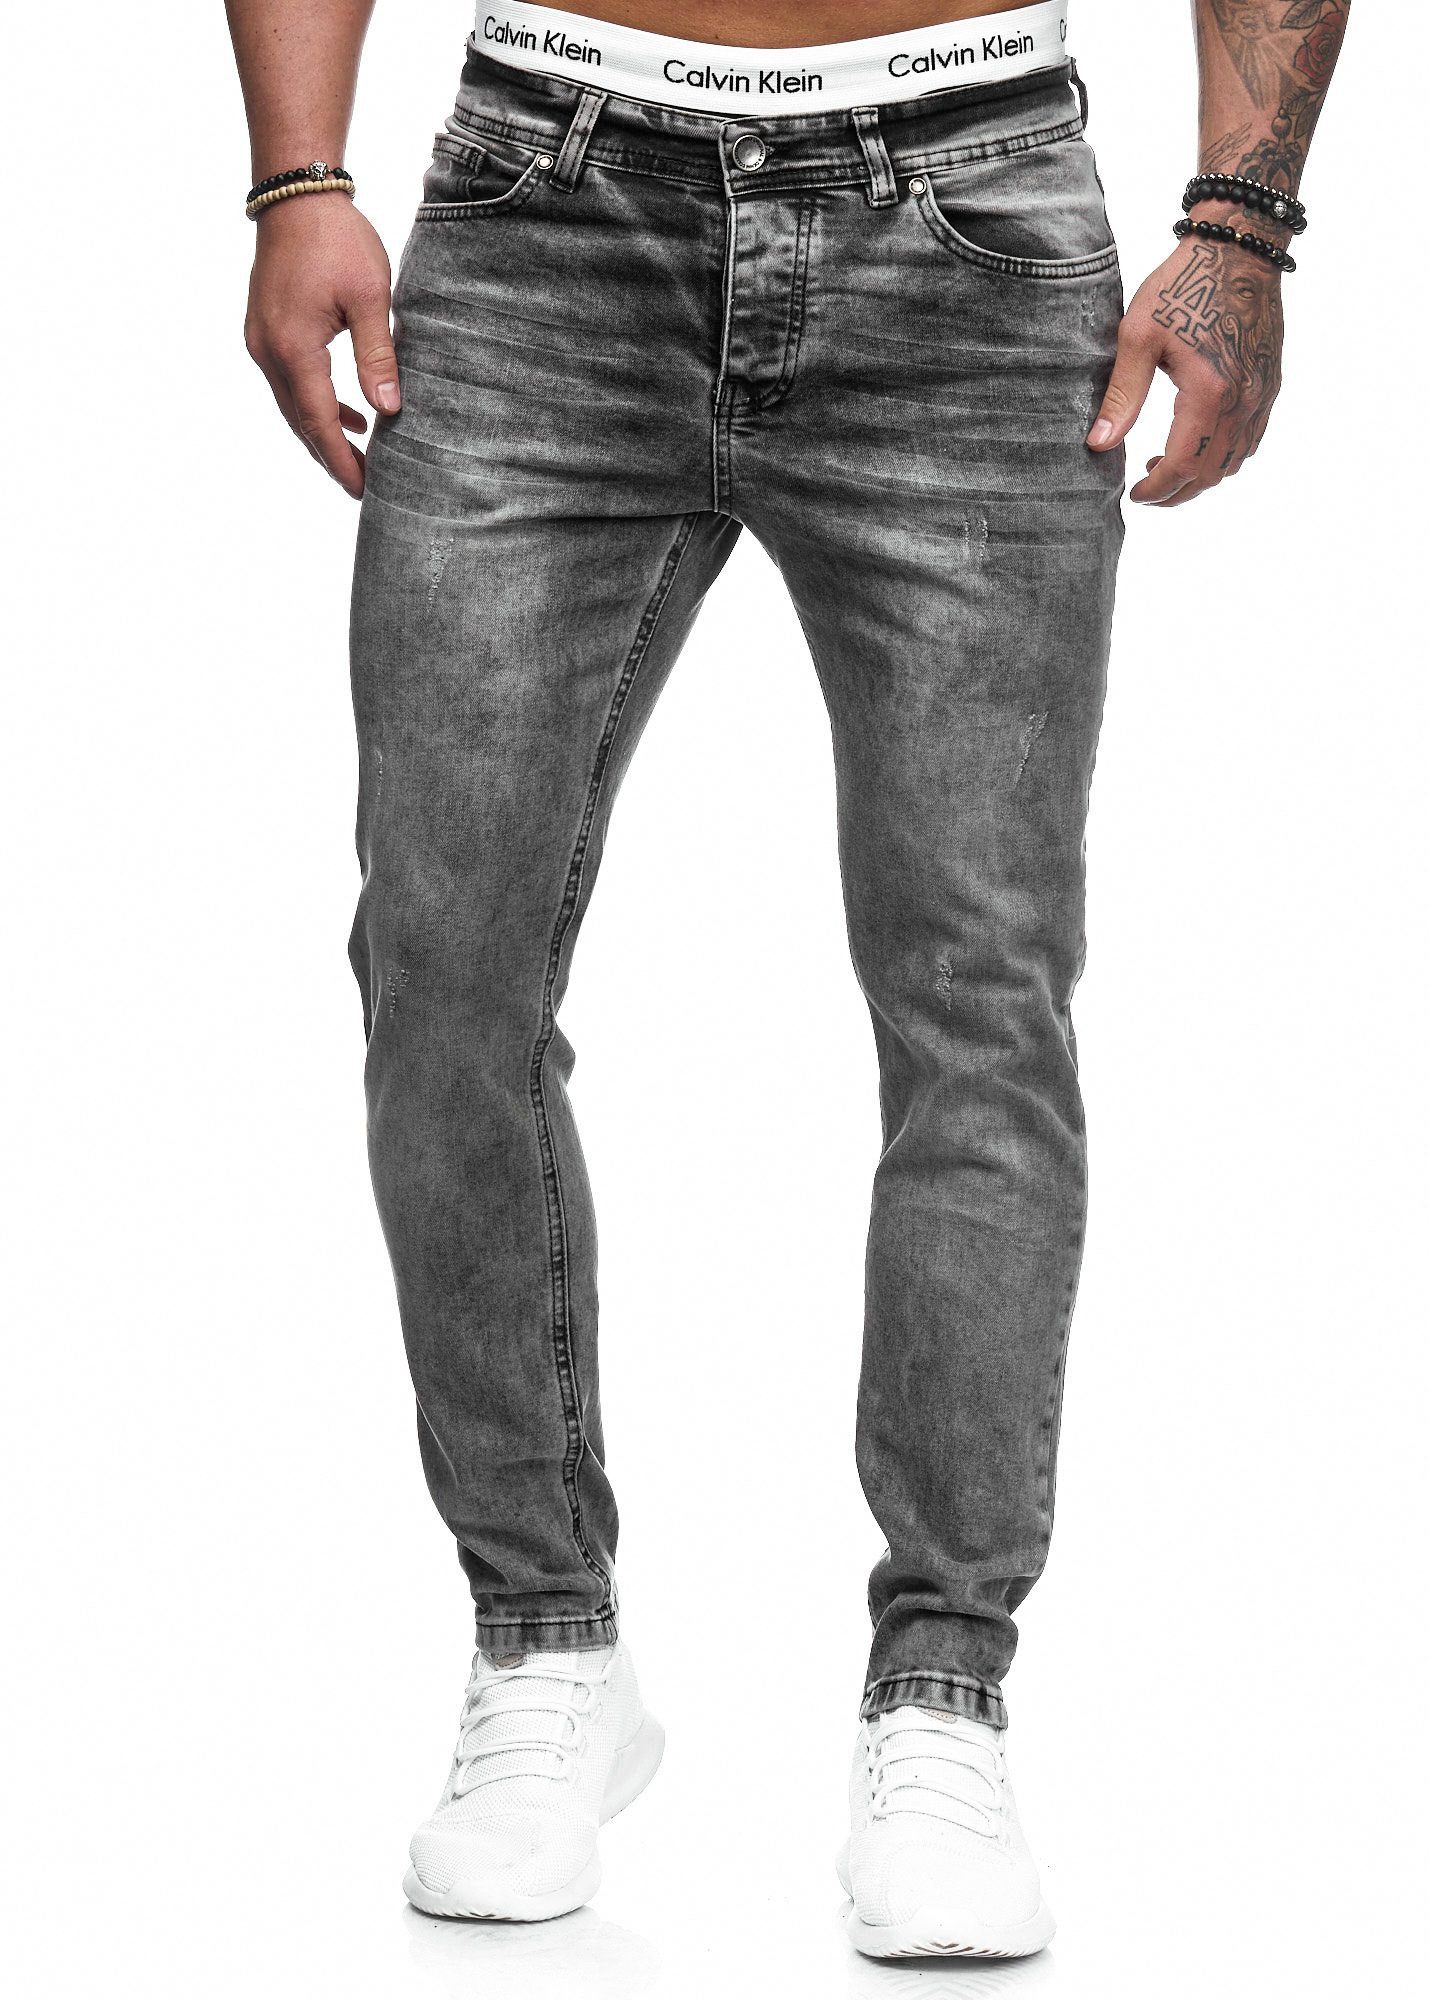 Code47 Slim-fit-Jeans Herren Designer Chino Jeans Hose Basic Stretch Jeanshose Slim Fit Grau 5079